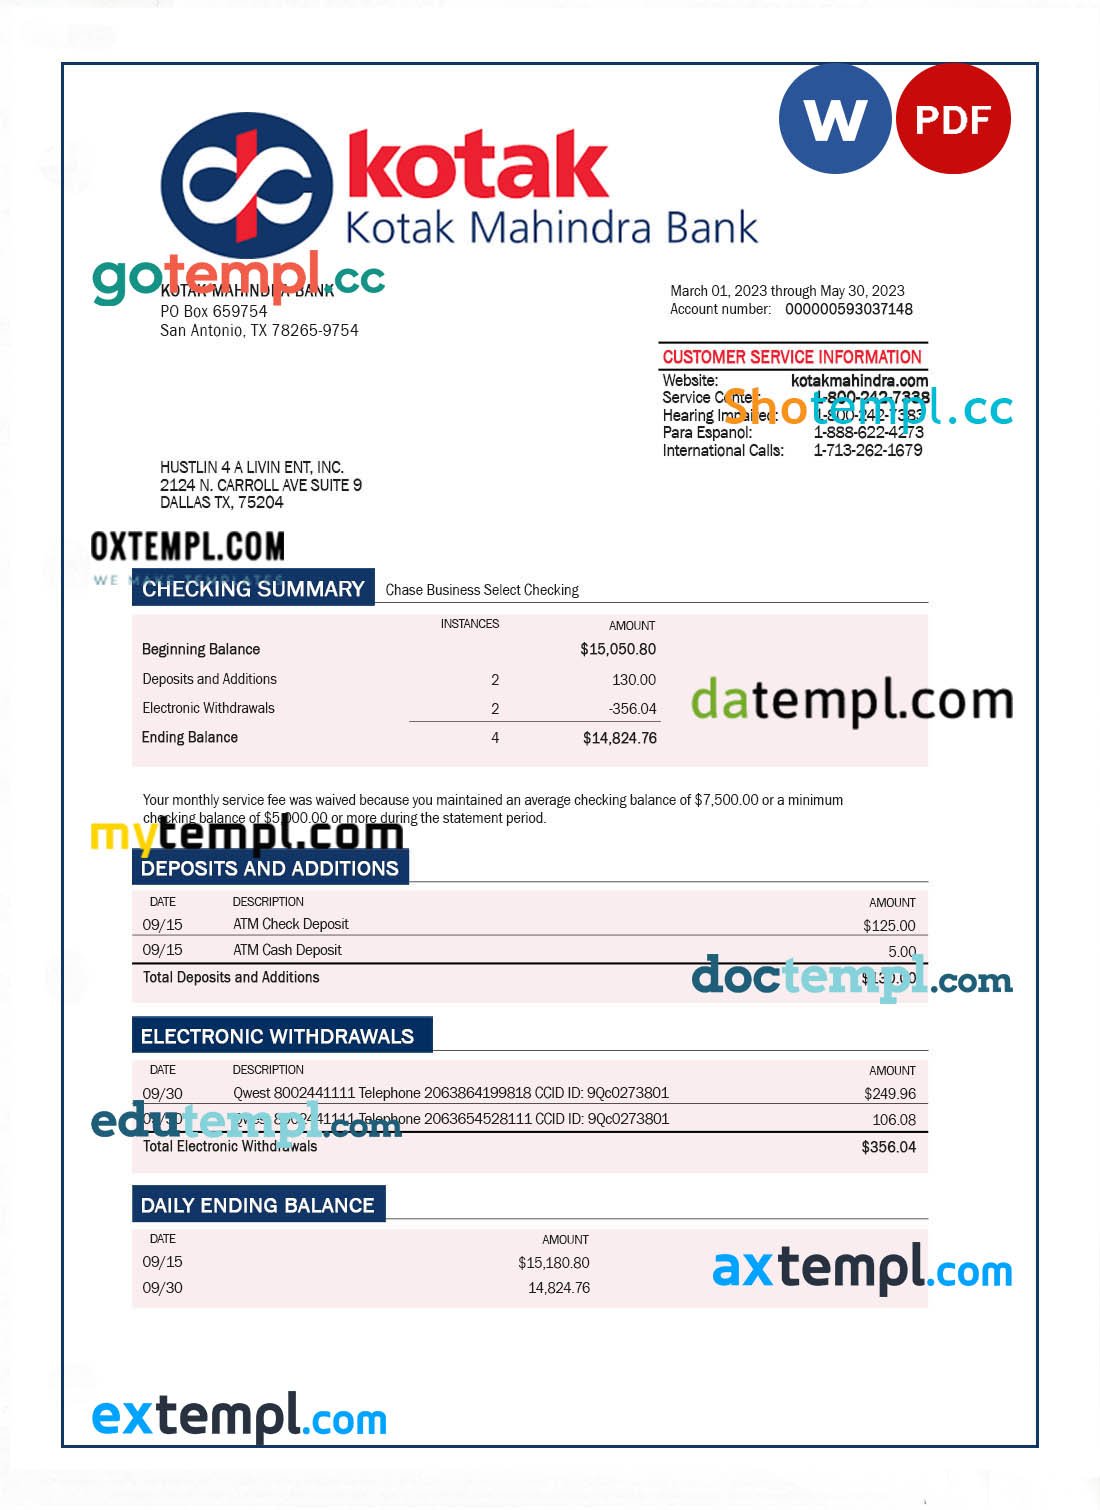 Kotak Mahindra Bank enterprise statement Word and PDF template